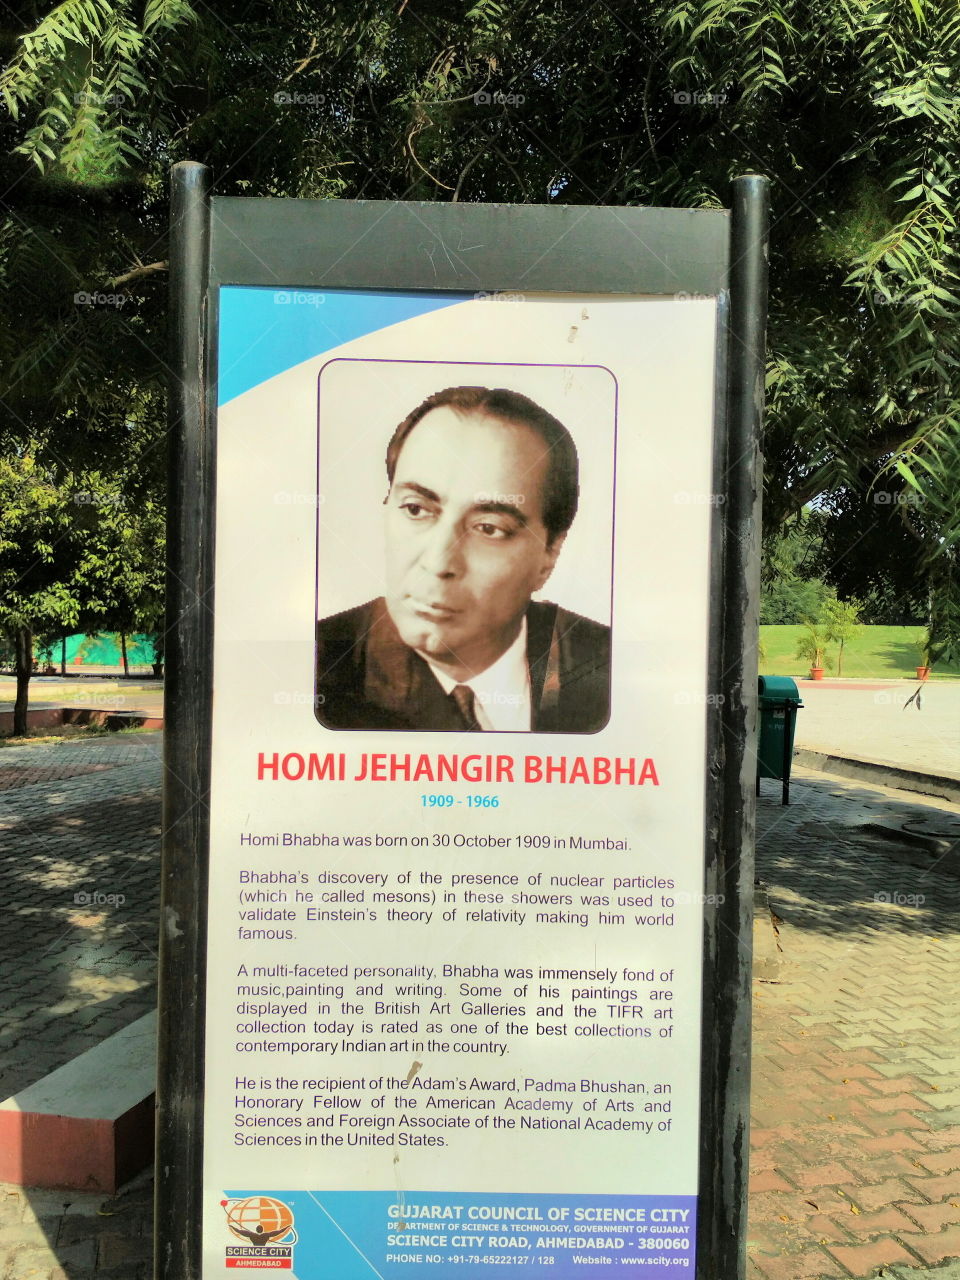 Homi jehangir bhabha